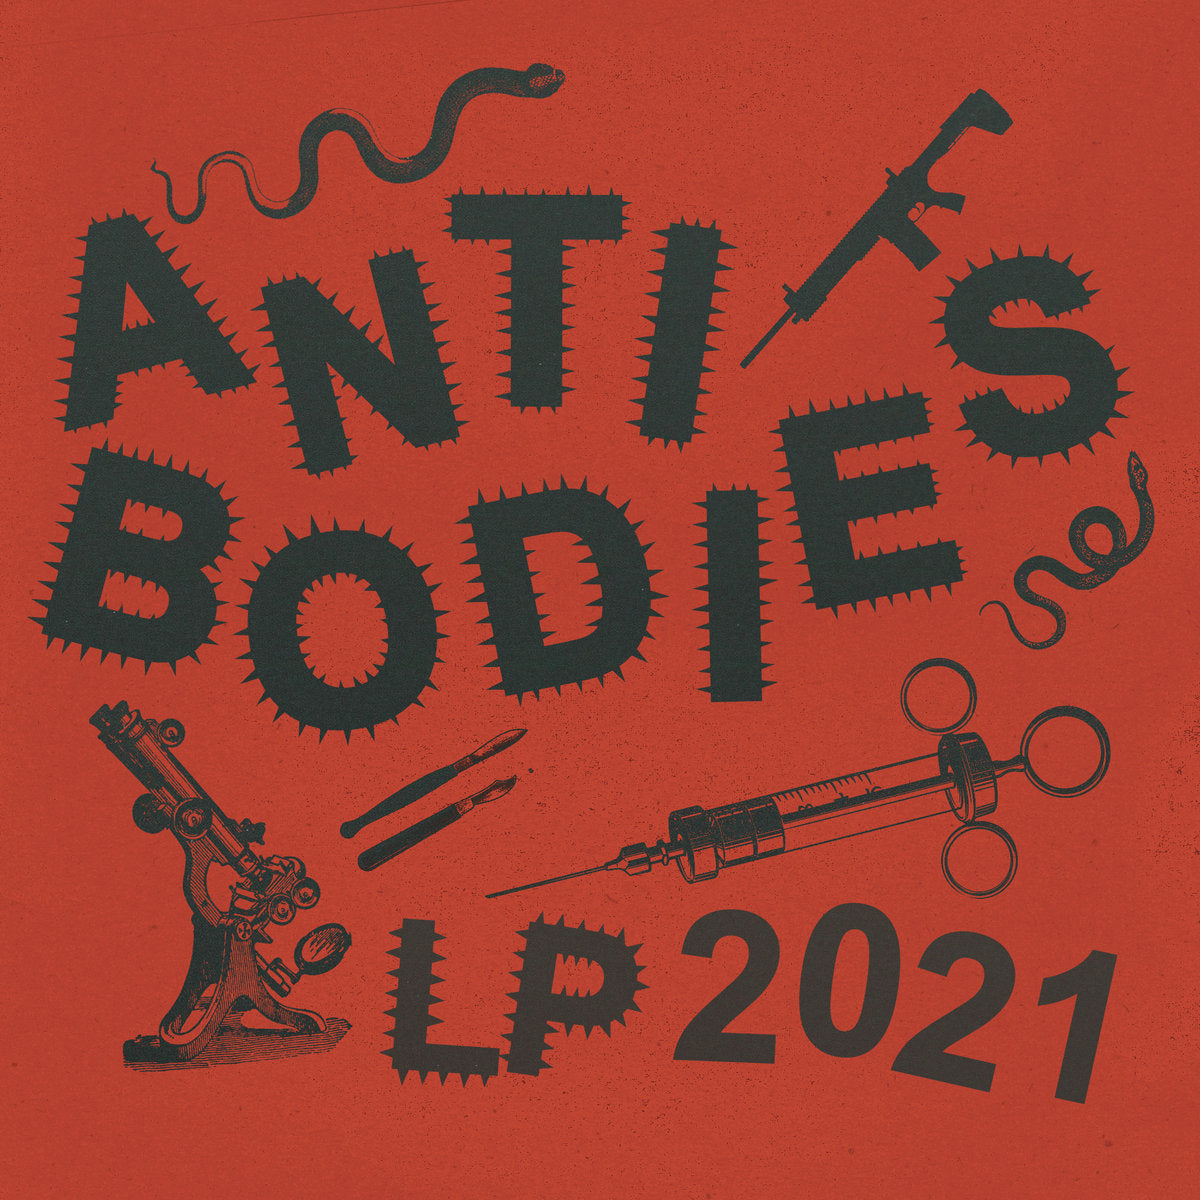 Antibodies - LP 2021 7" EP